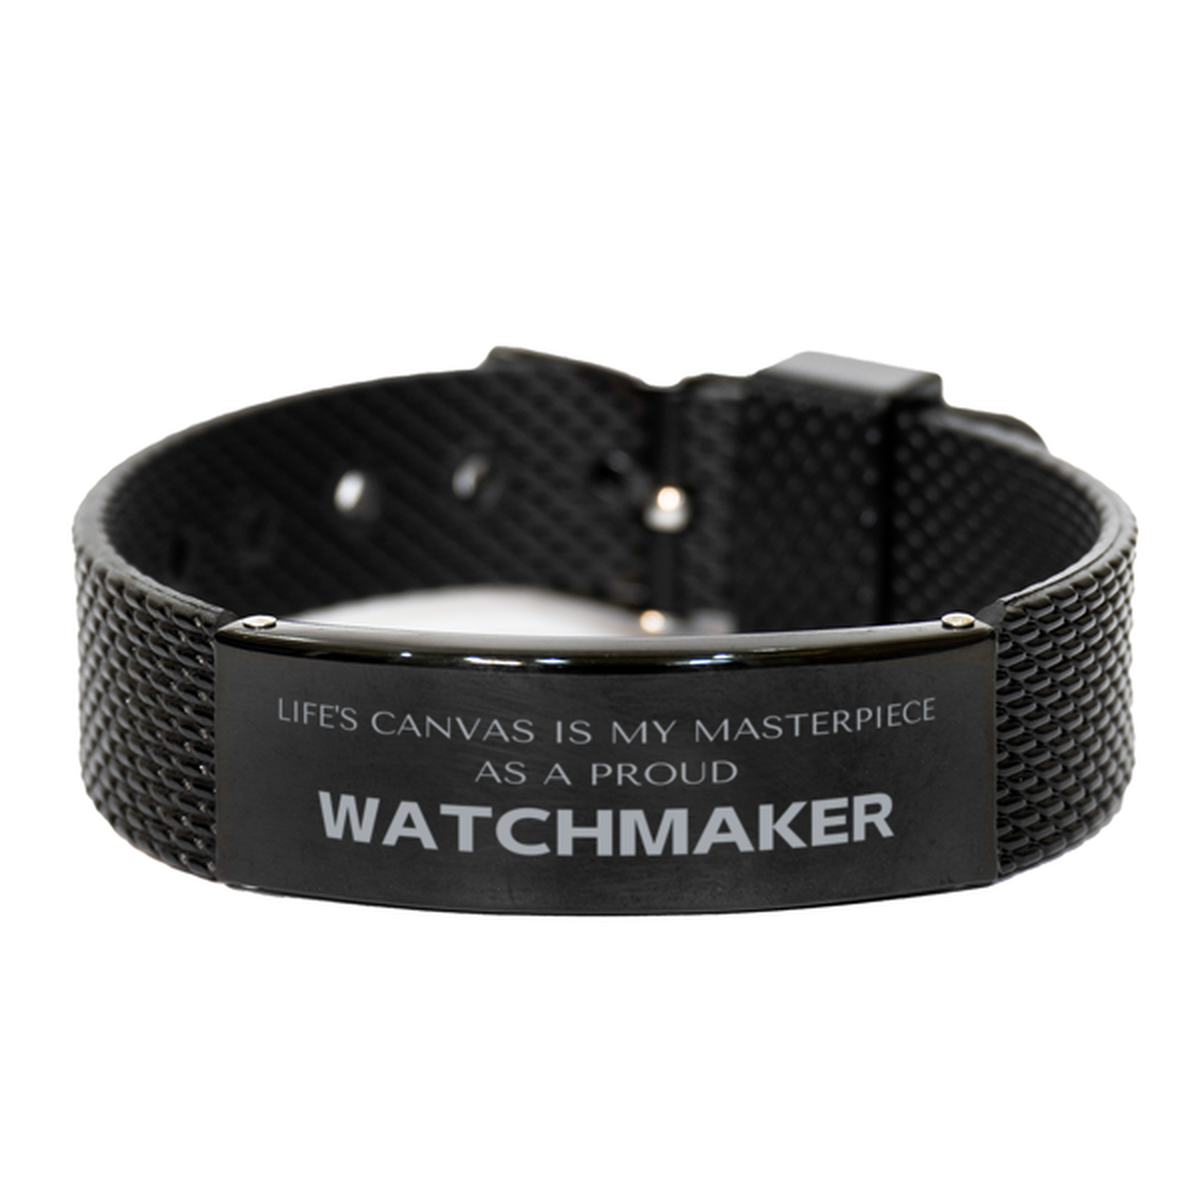 Proud Watchmaker Gifts, Life's canvas is my masterpiece, Epic Birthday Christmas Unique Black Shark Mesh Bracelet For Watchmaker, Coworkers, Men, Women, Friends